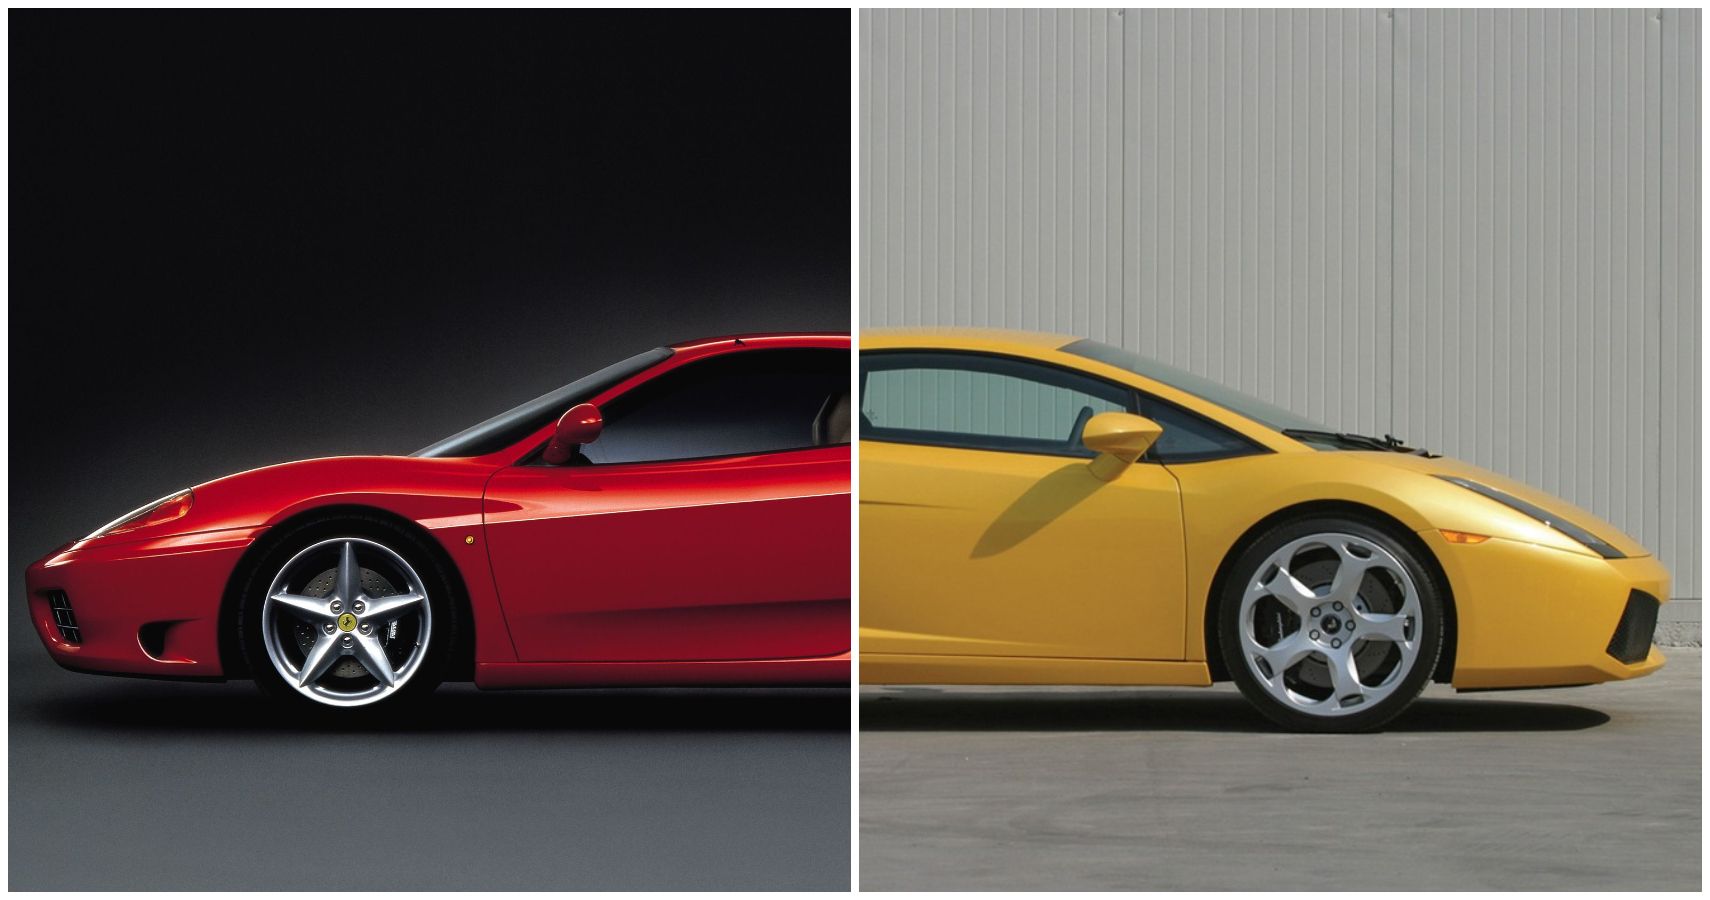 Modern Classic Supercars: 2002 Ferrari 360 Modena Vs 2003 Lamborghini  Gallardo